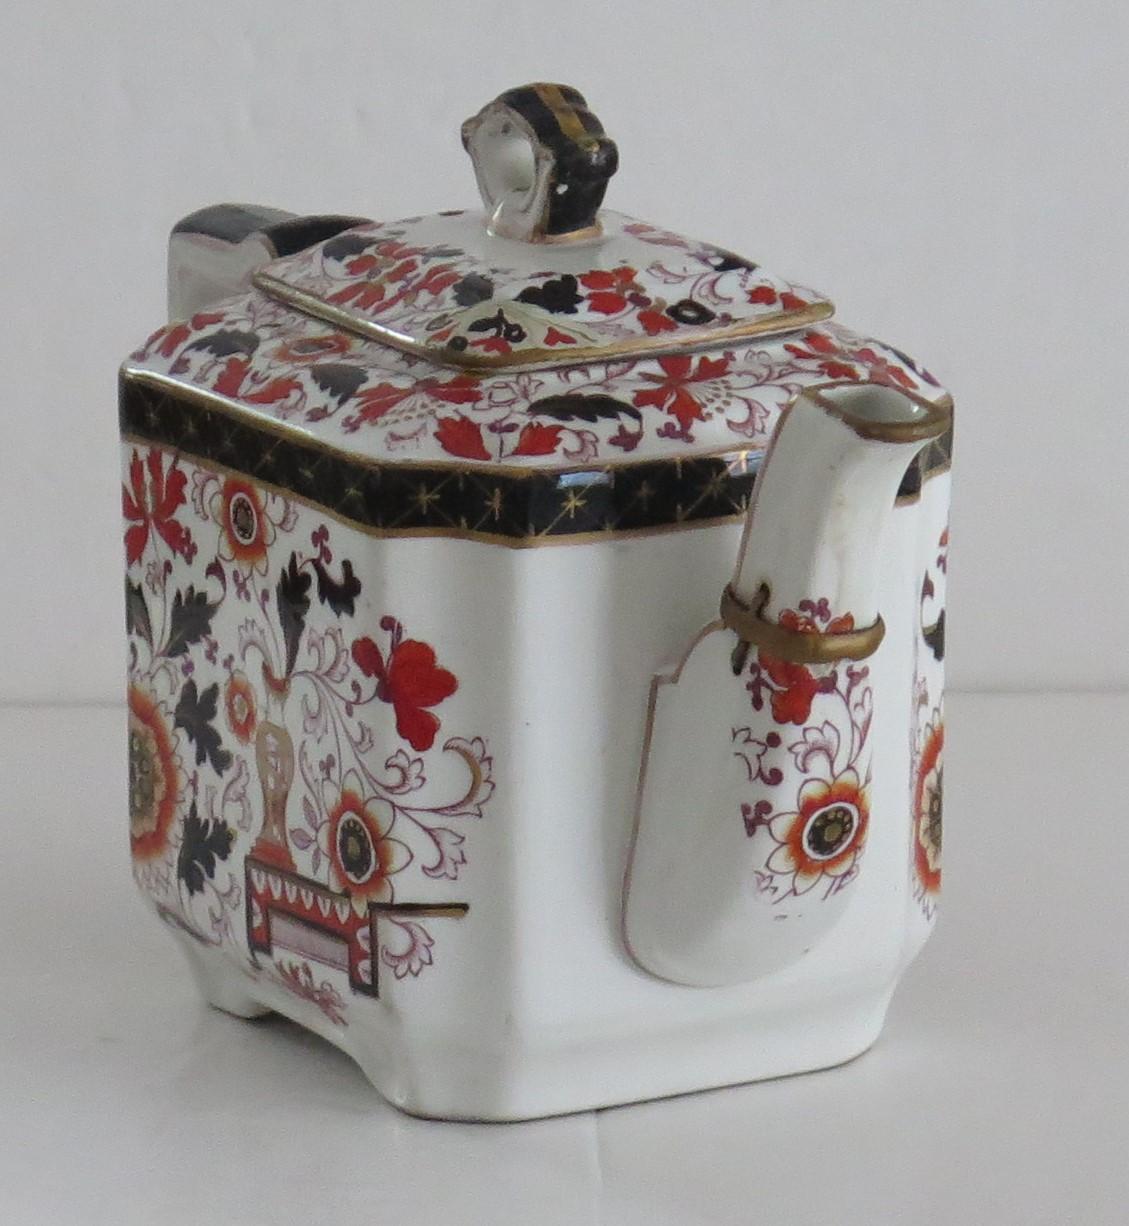 Mason's Ashworth's Ironstone Teapot in Old Japan Vase Pattern, circa 1875 For Sale 1